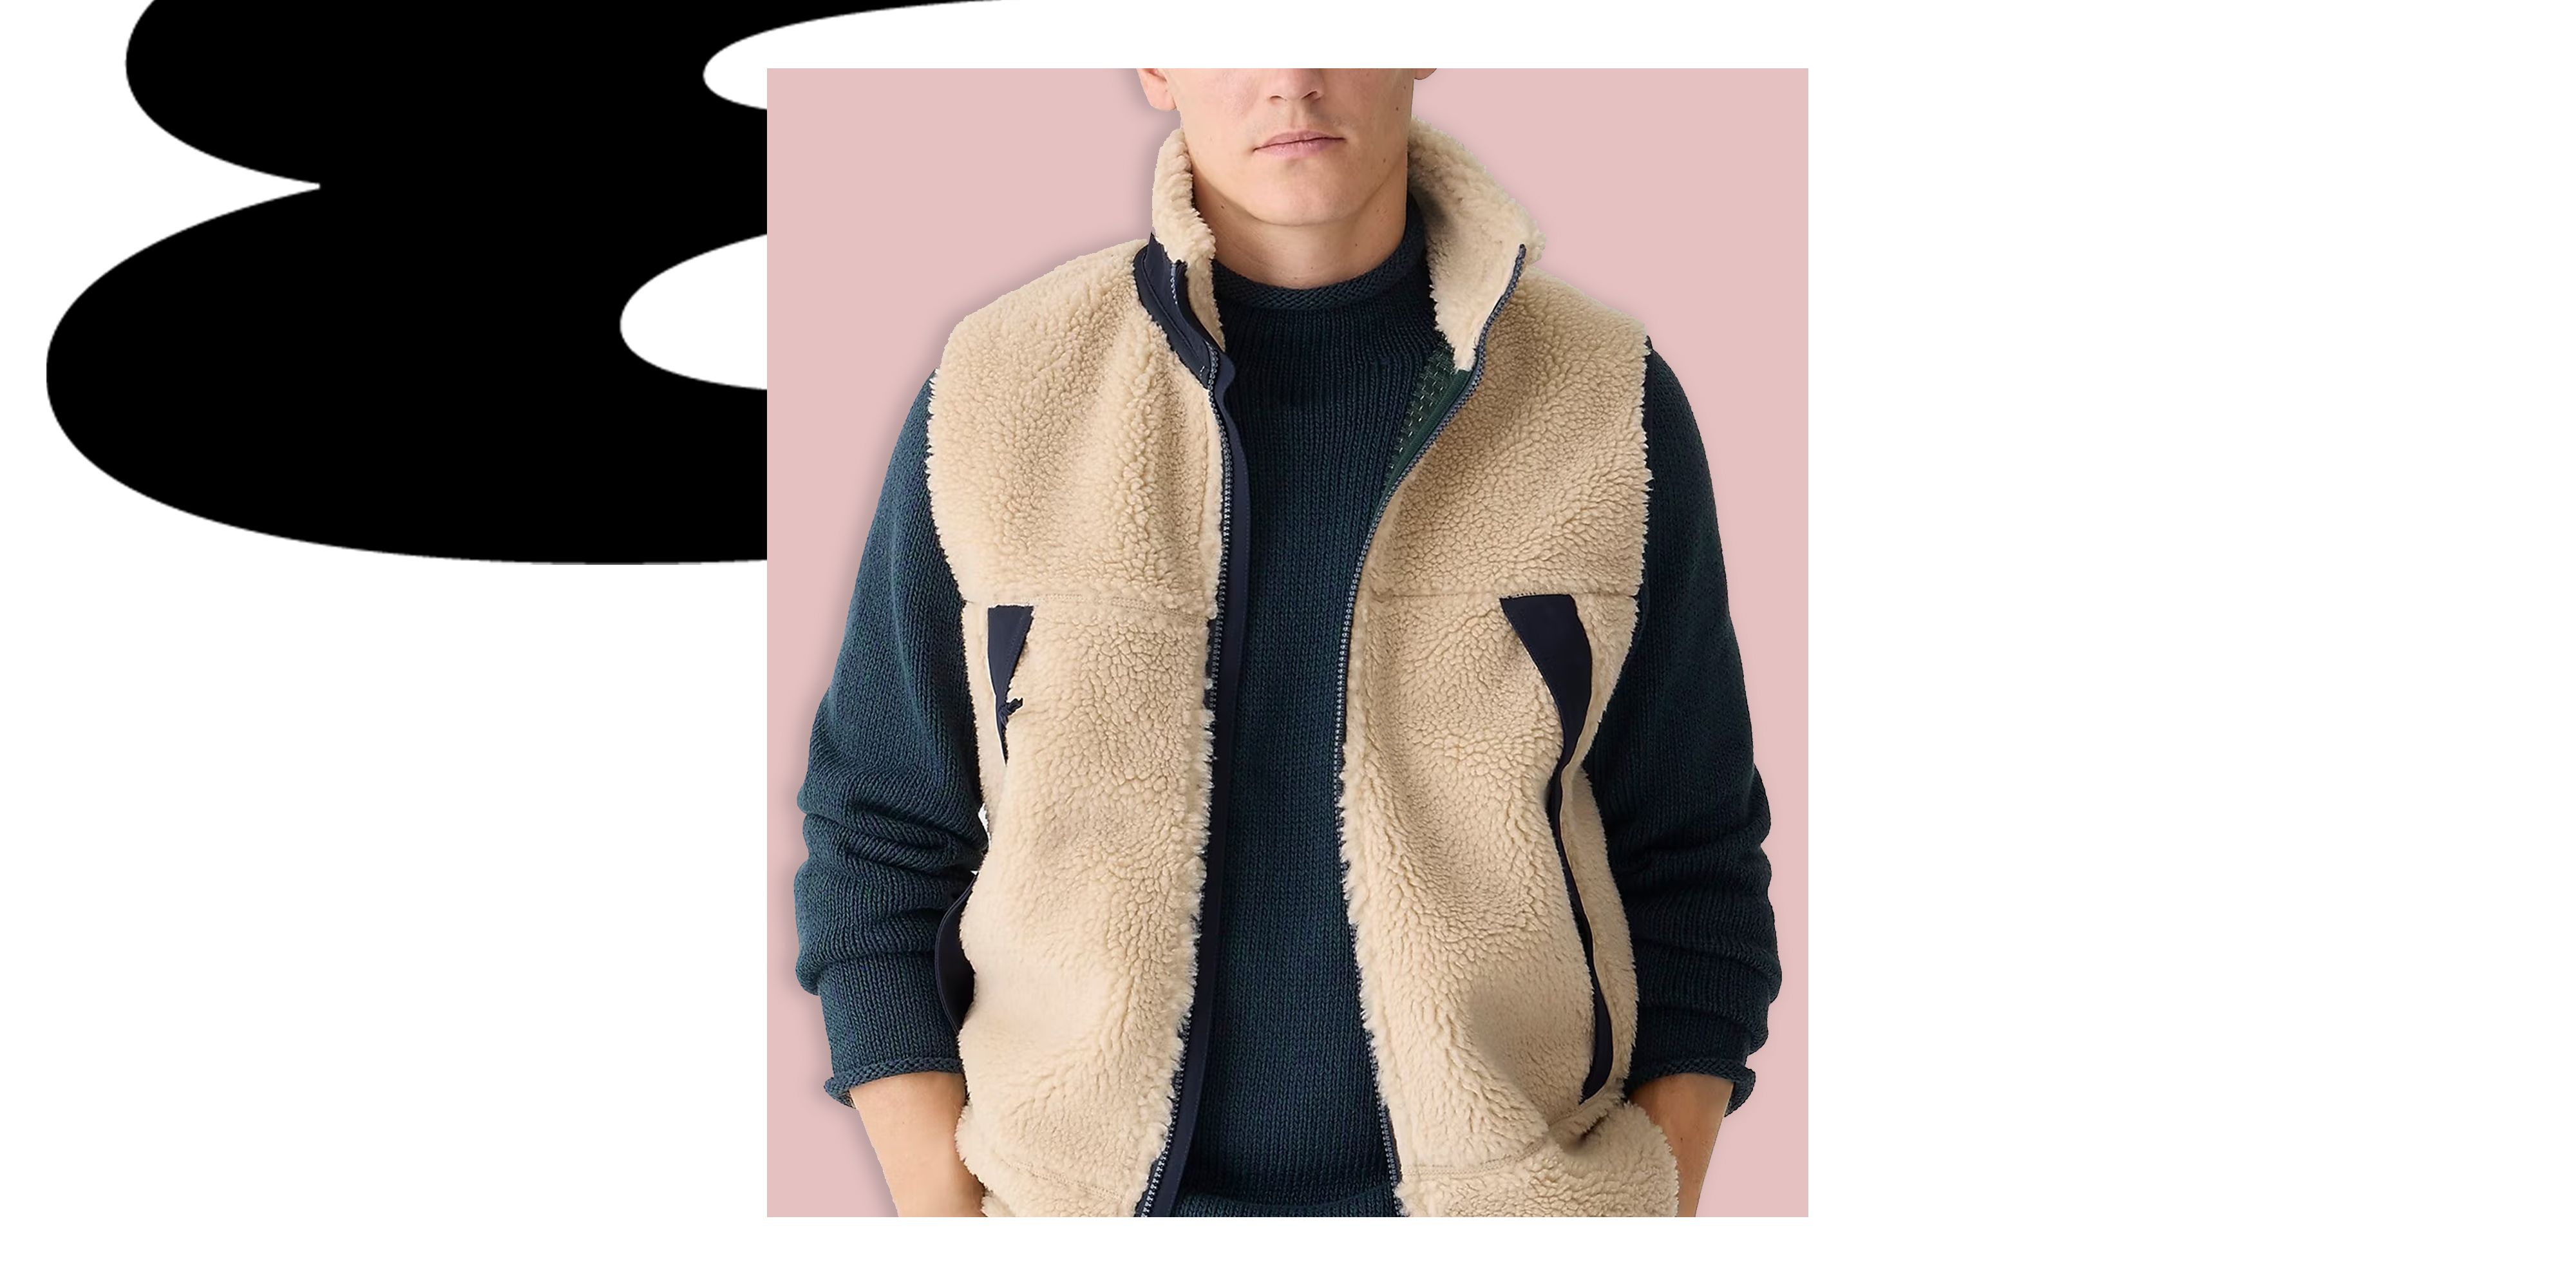 The Best Fleece Vest for Men Is Your Always-On Layering Solution